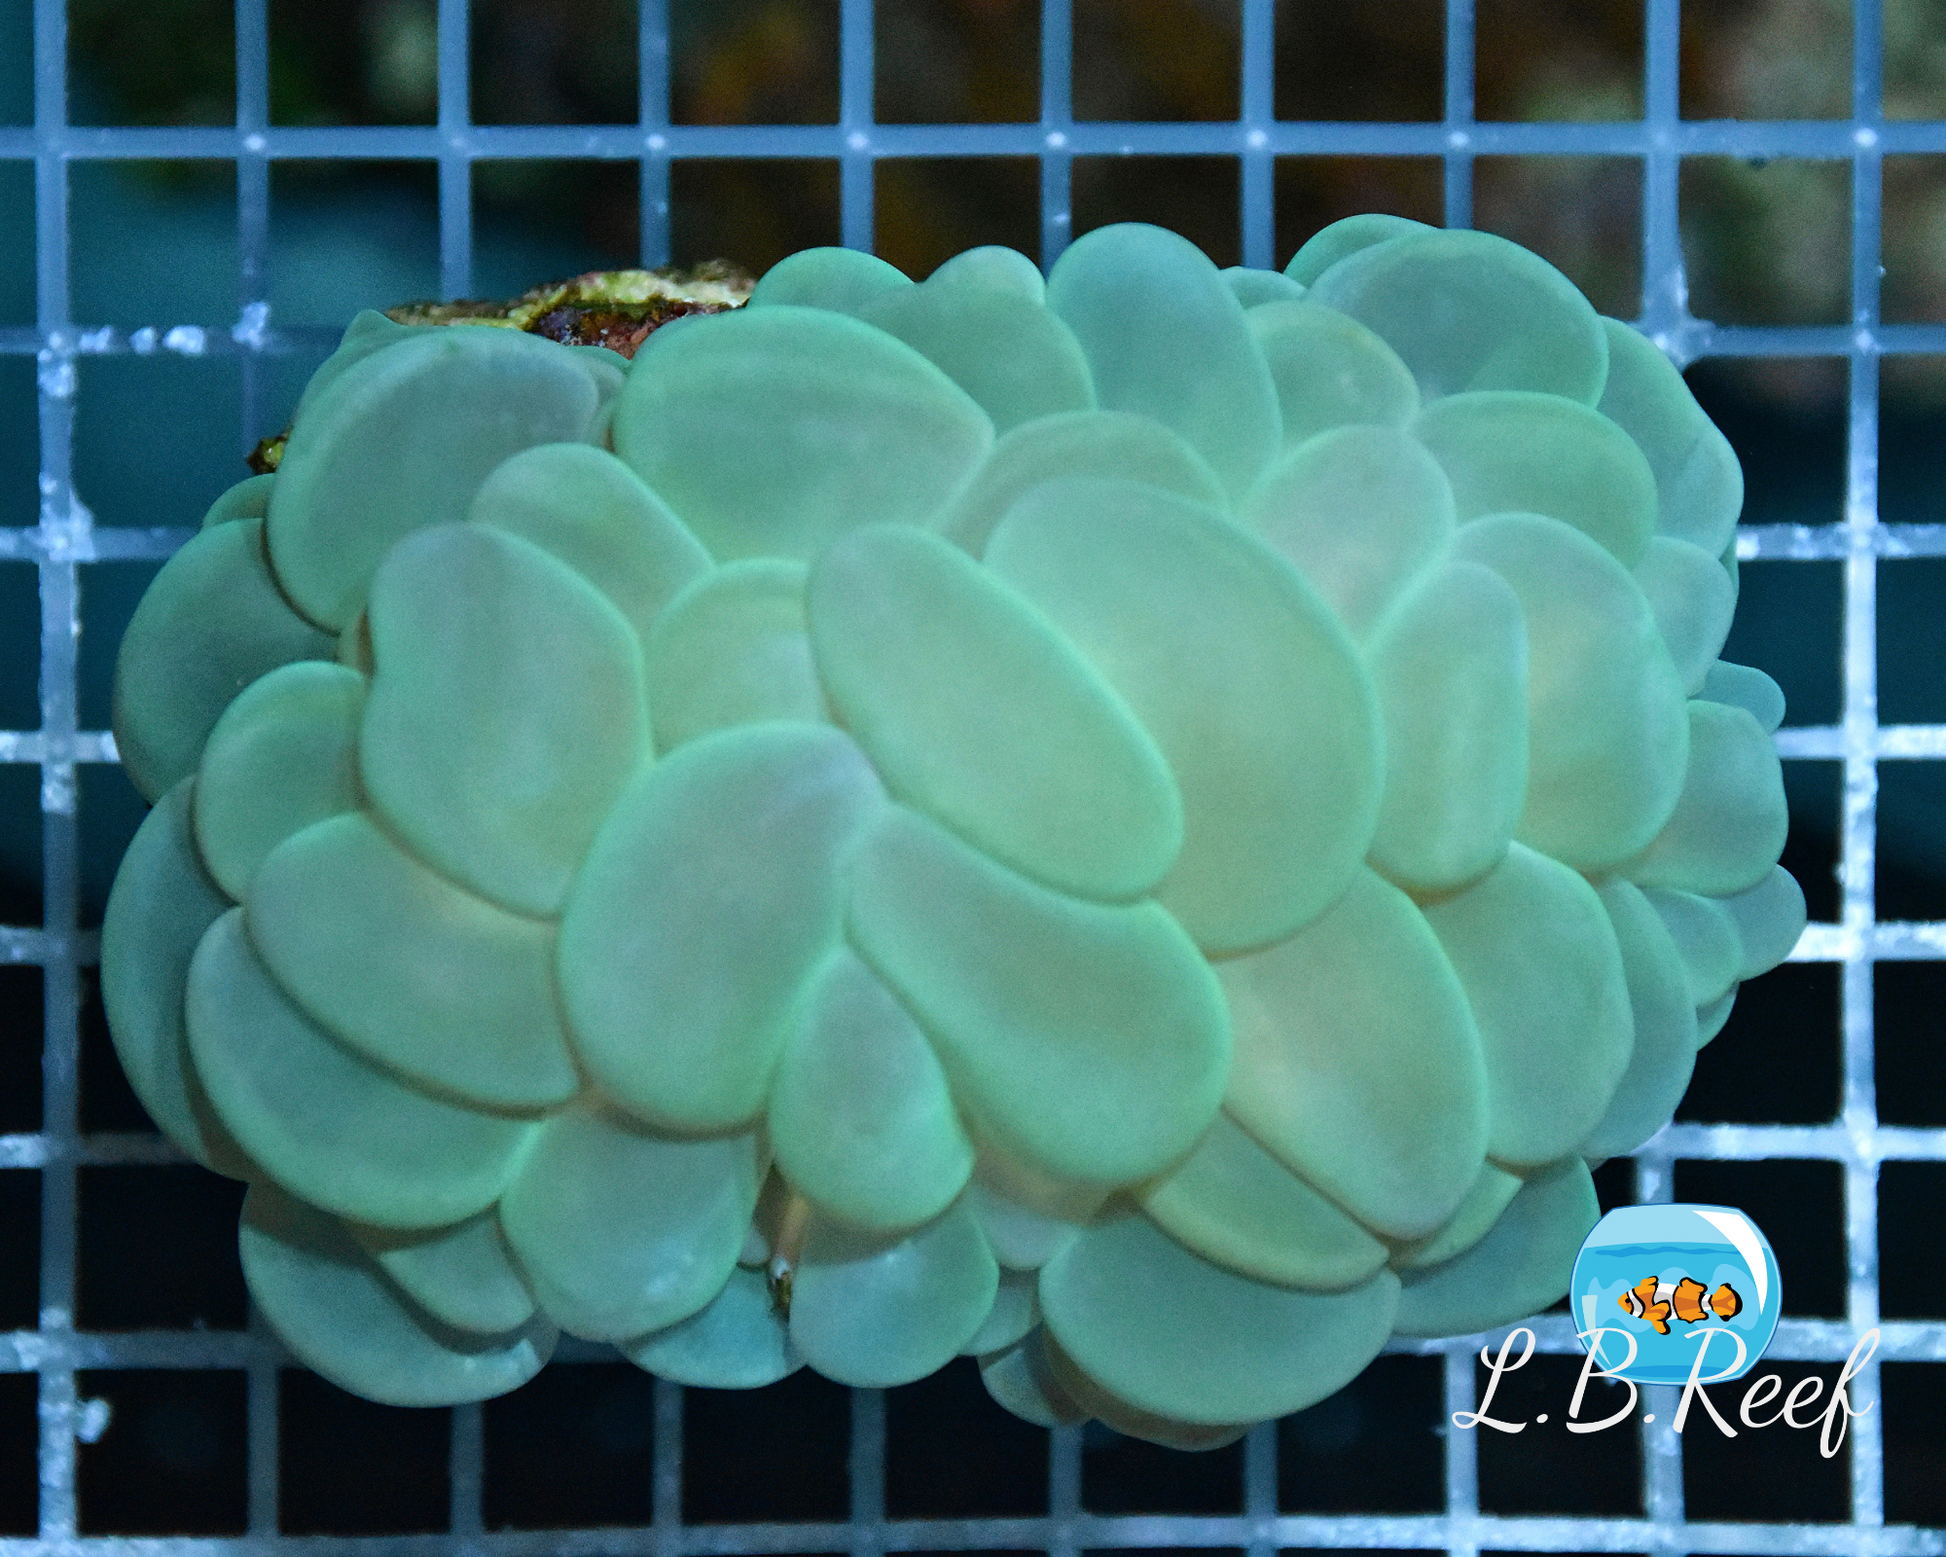 Plerogyra sinuosa "Neon Green" - L.B.Reef